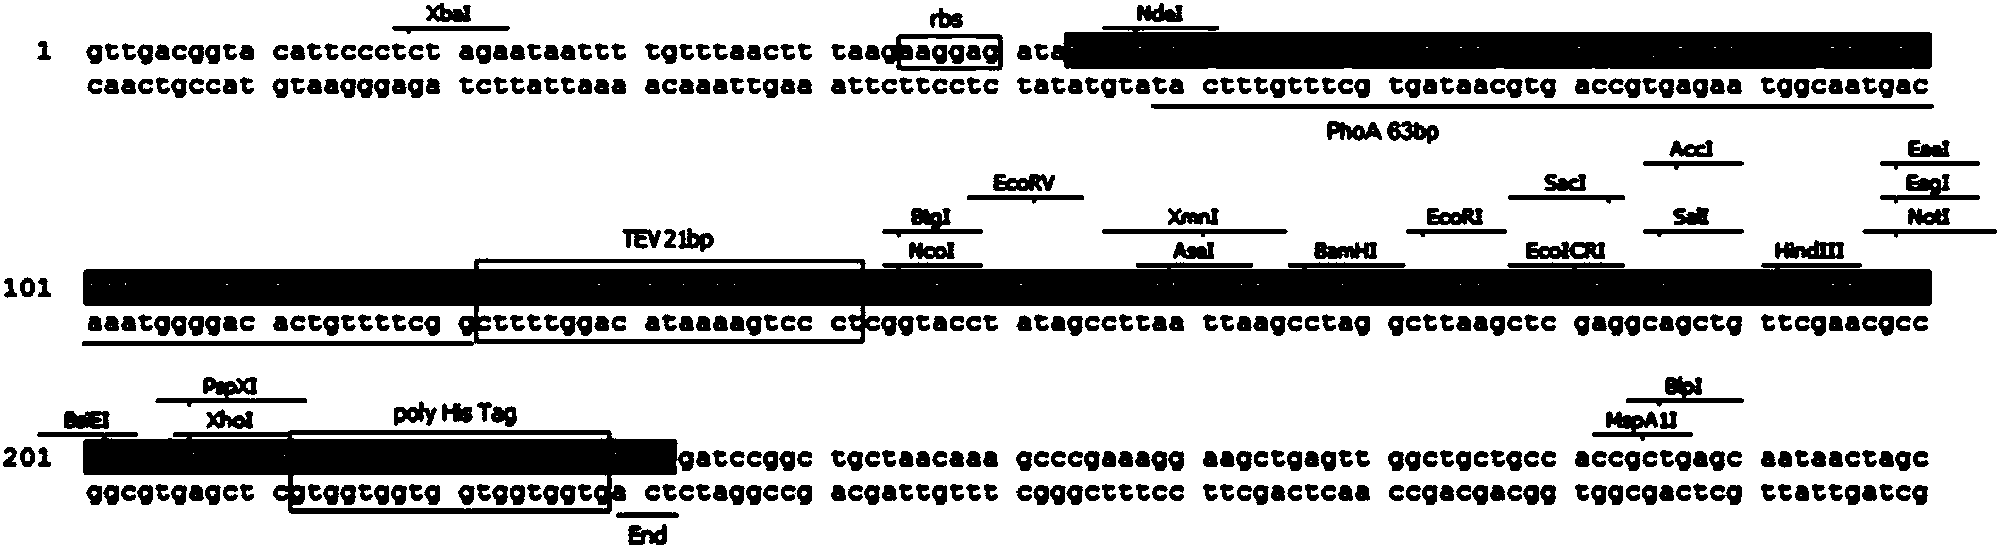 Plasmid vector of escherichia coli secretory expression heterologous protein and establishment method of plasmid vector